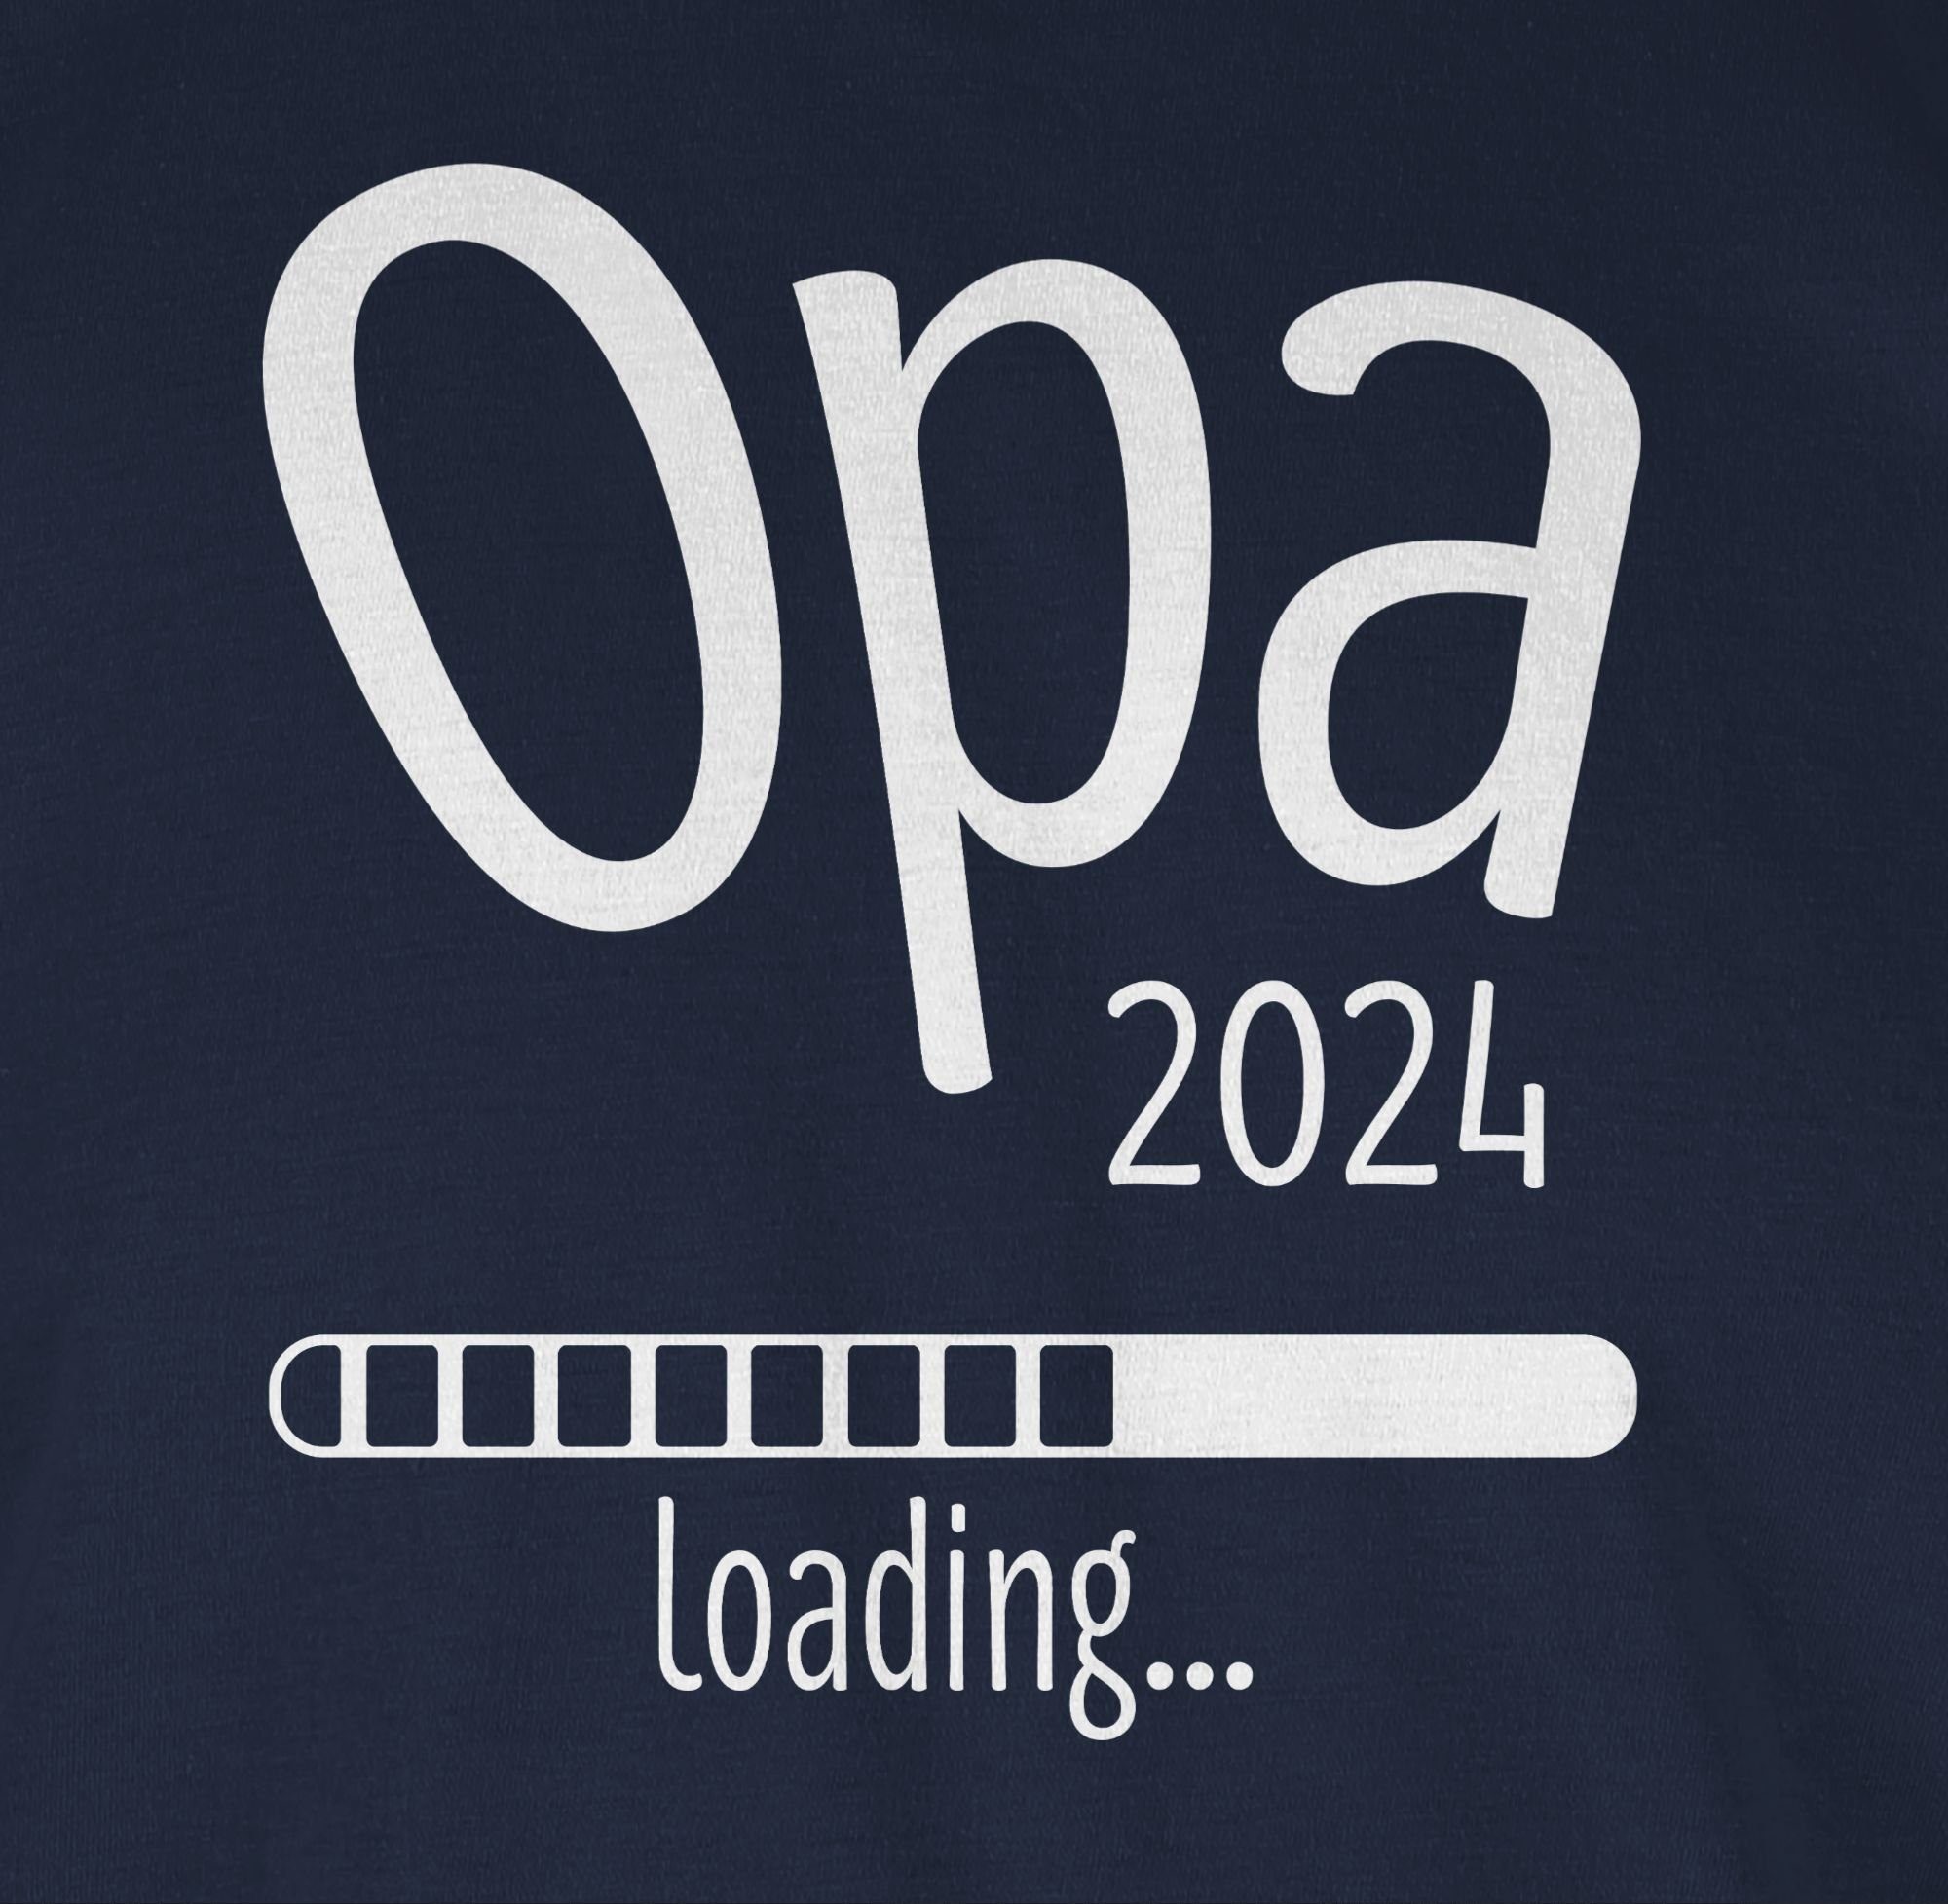 Opa Geschenke 2 2024 Navy Shirtracer Opa T-Shirt Blau loading